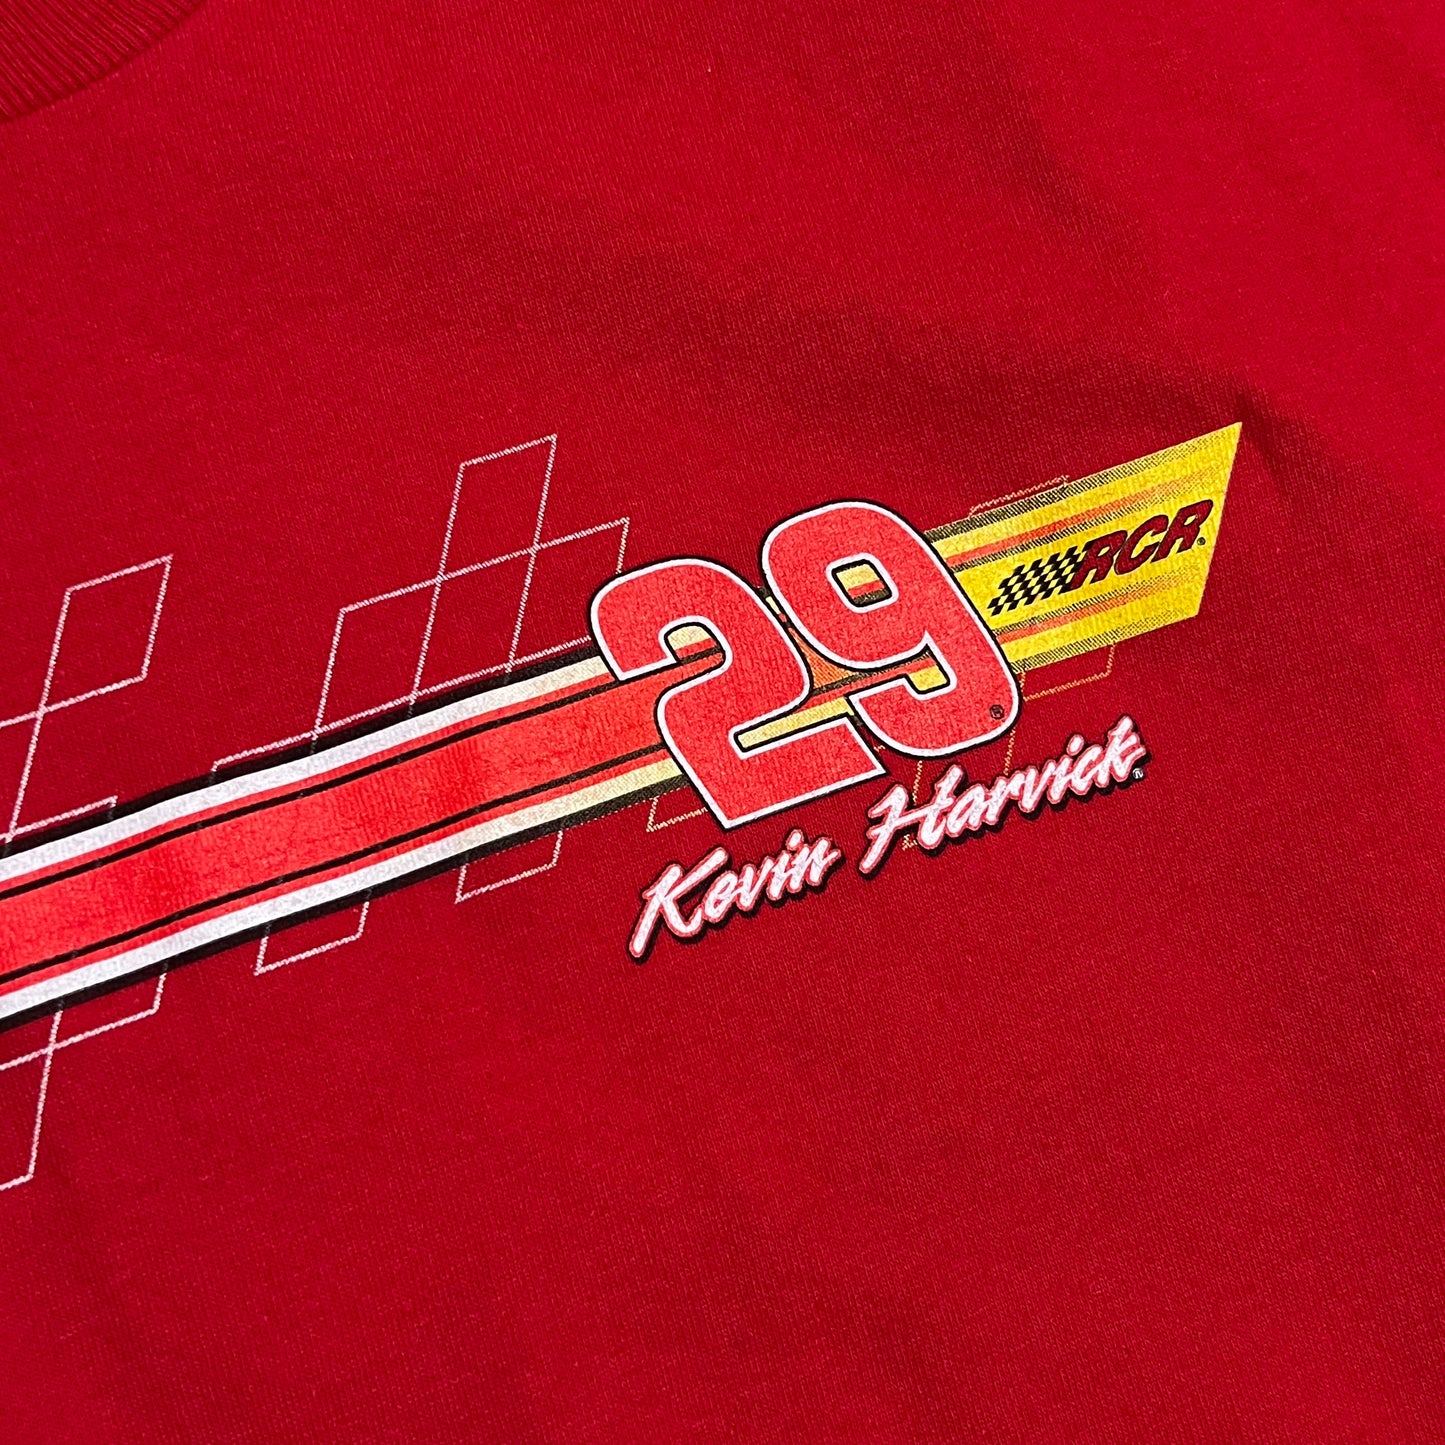 Kevin Harvick #29 NASCAR Racing Team Shirt - 2XL